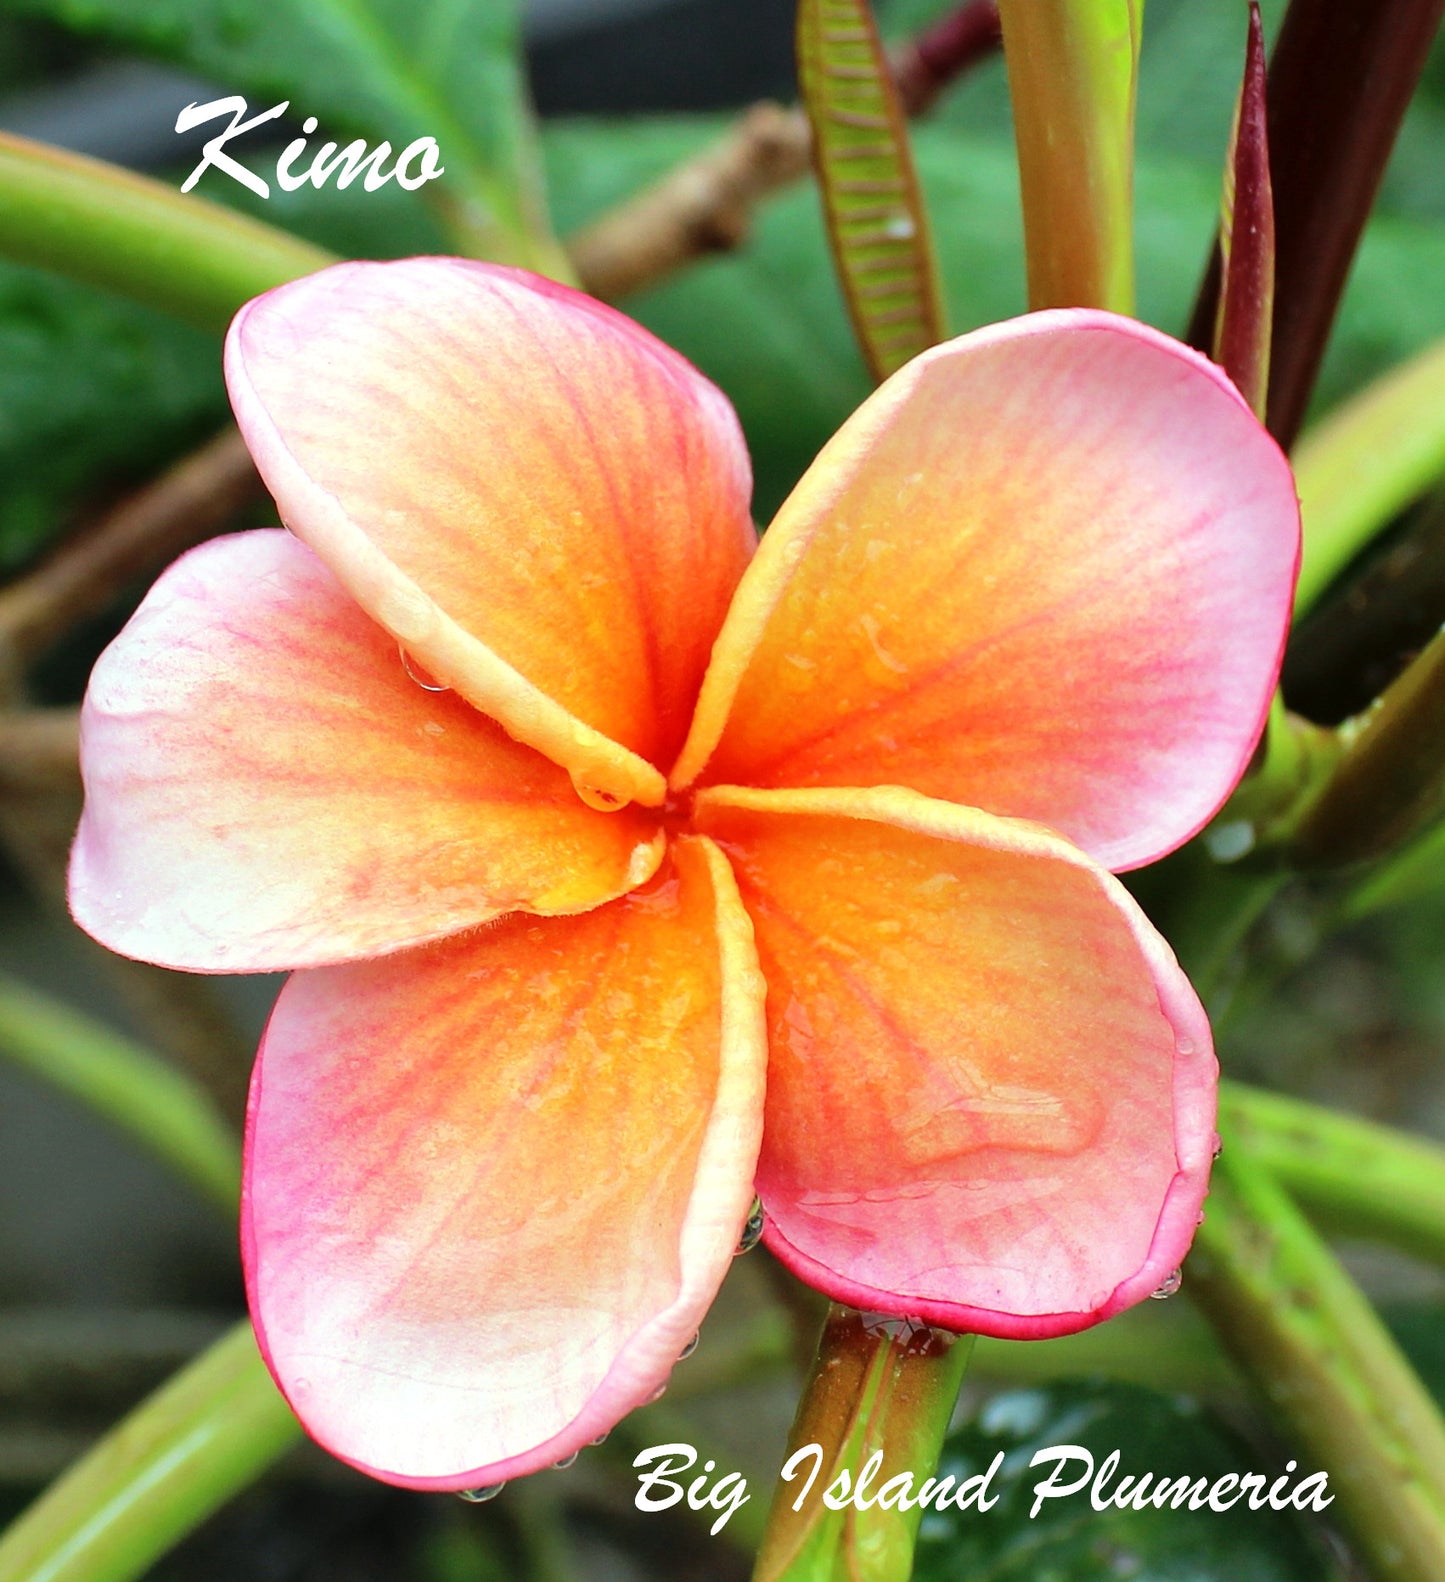 Kimo Plumeria